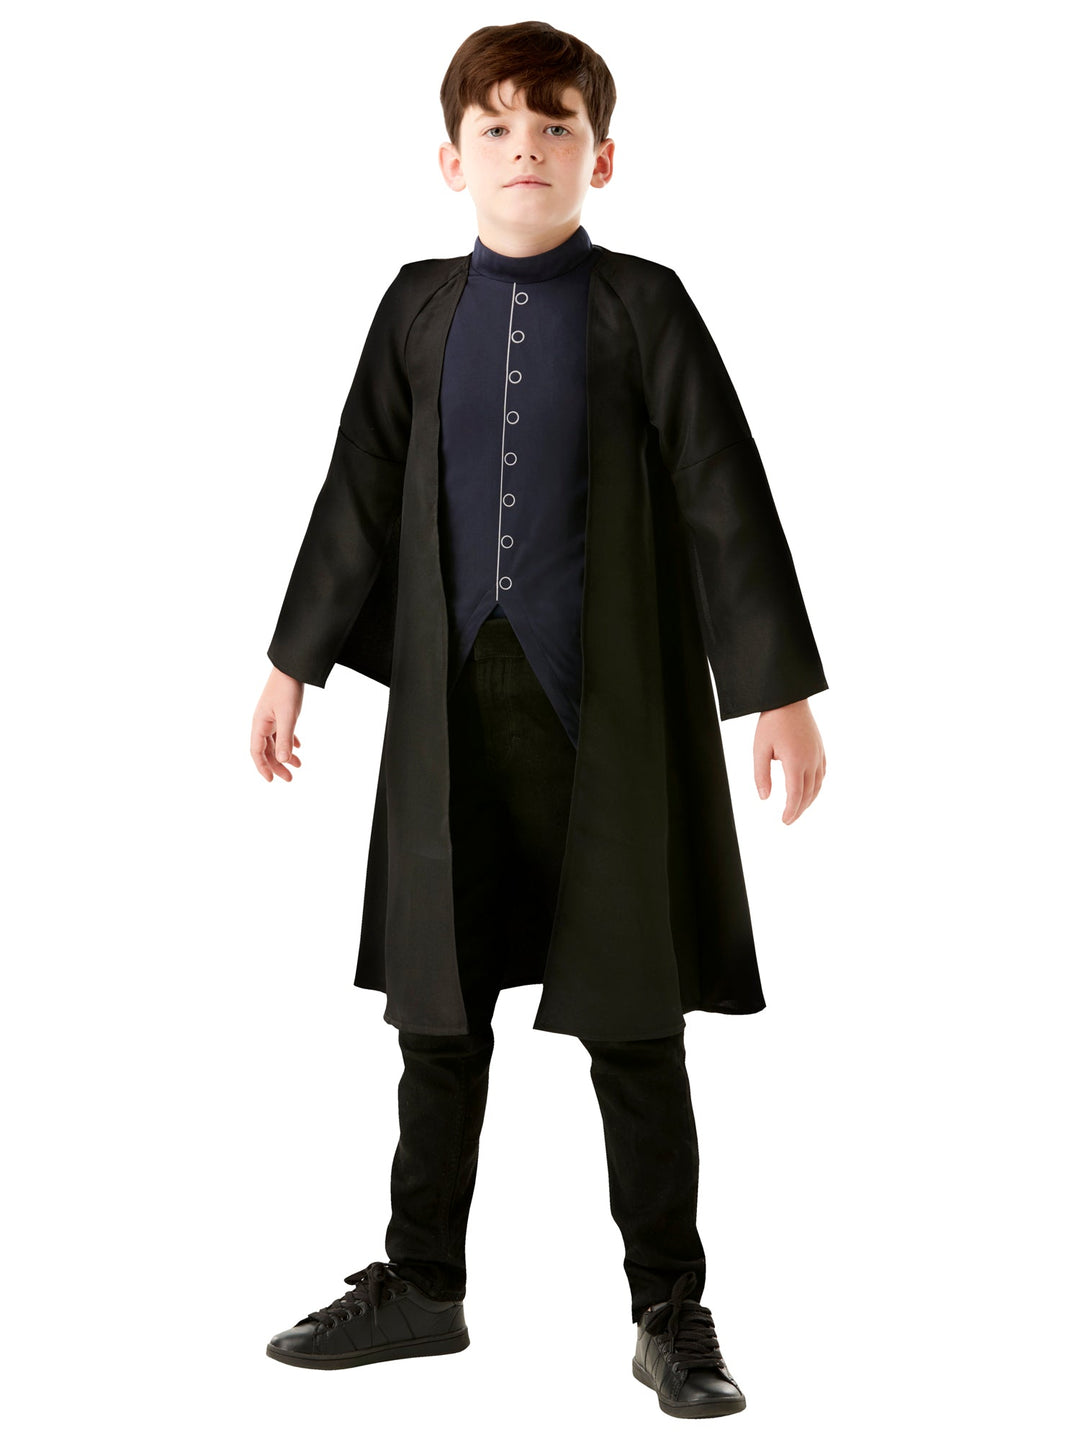 Severus Snape Costume Child Black Robe Harry Potter Teacher_4